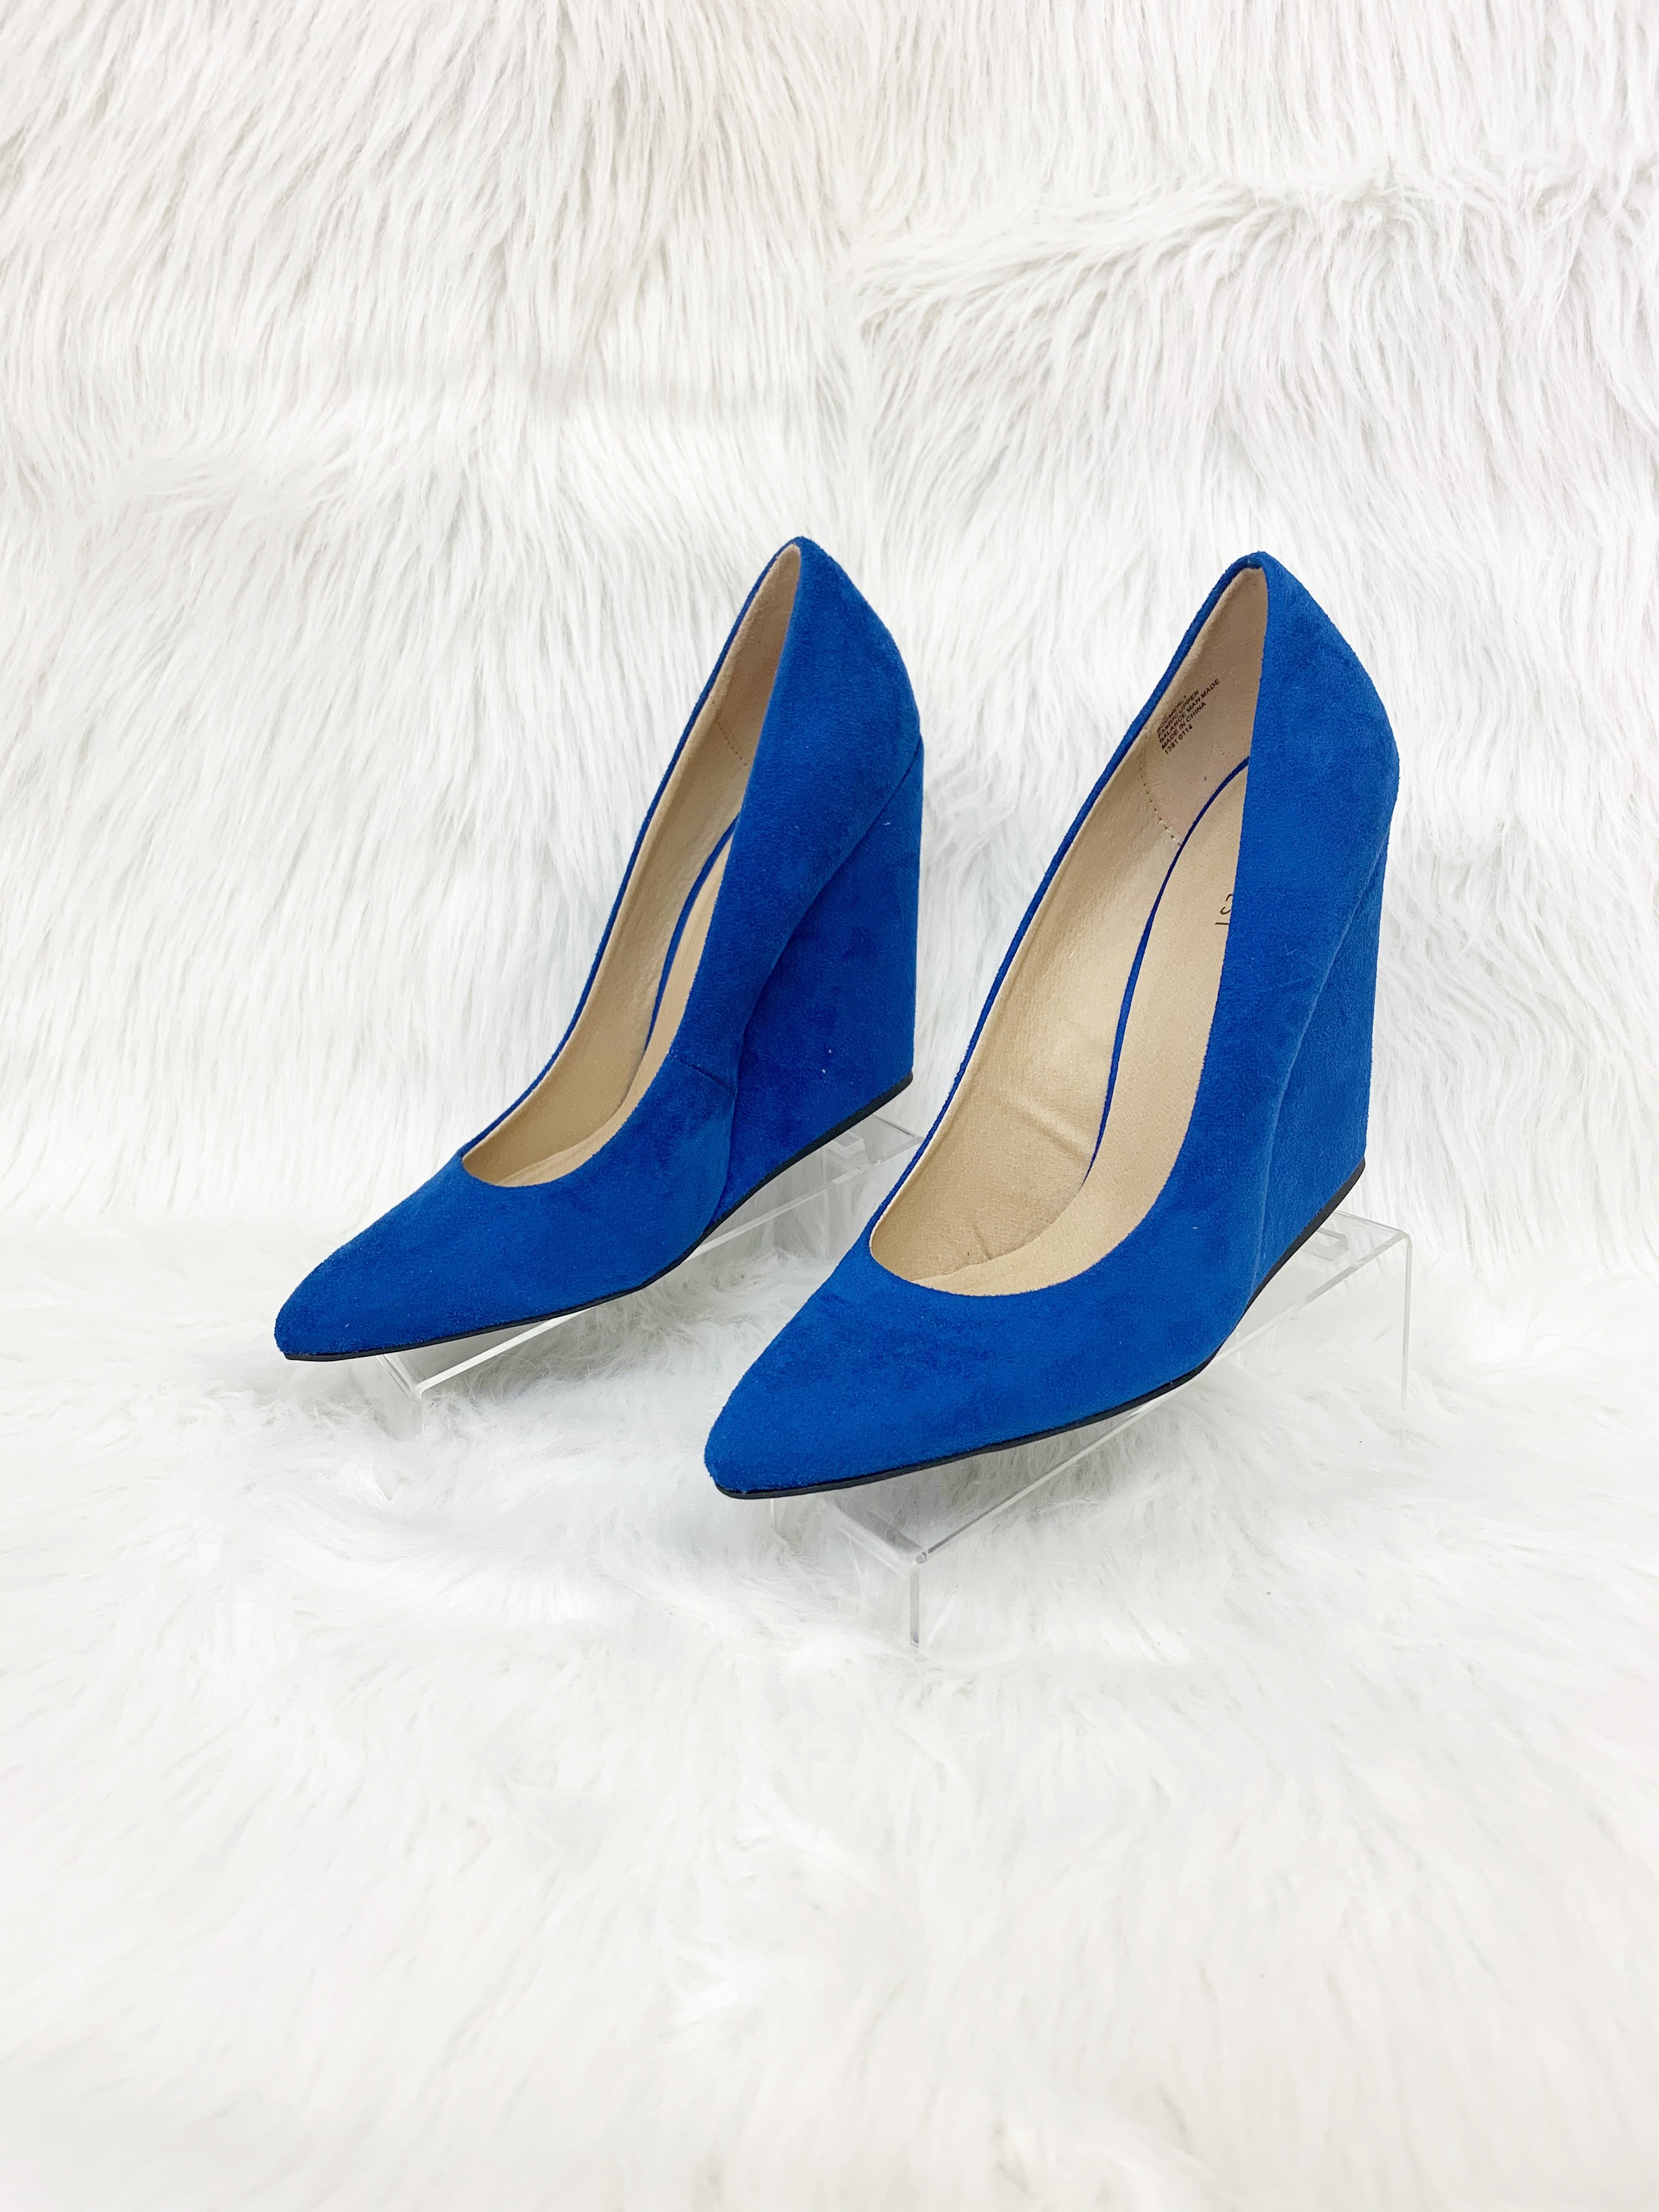 nine west royal blue shoes